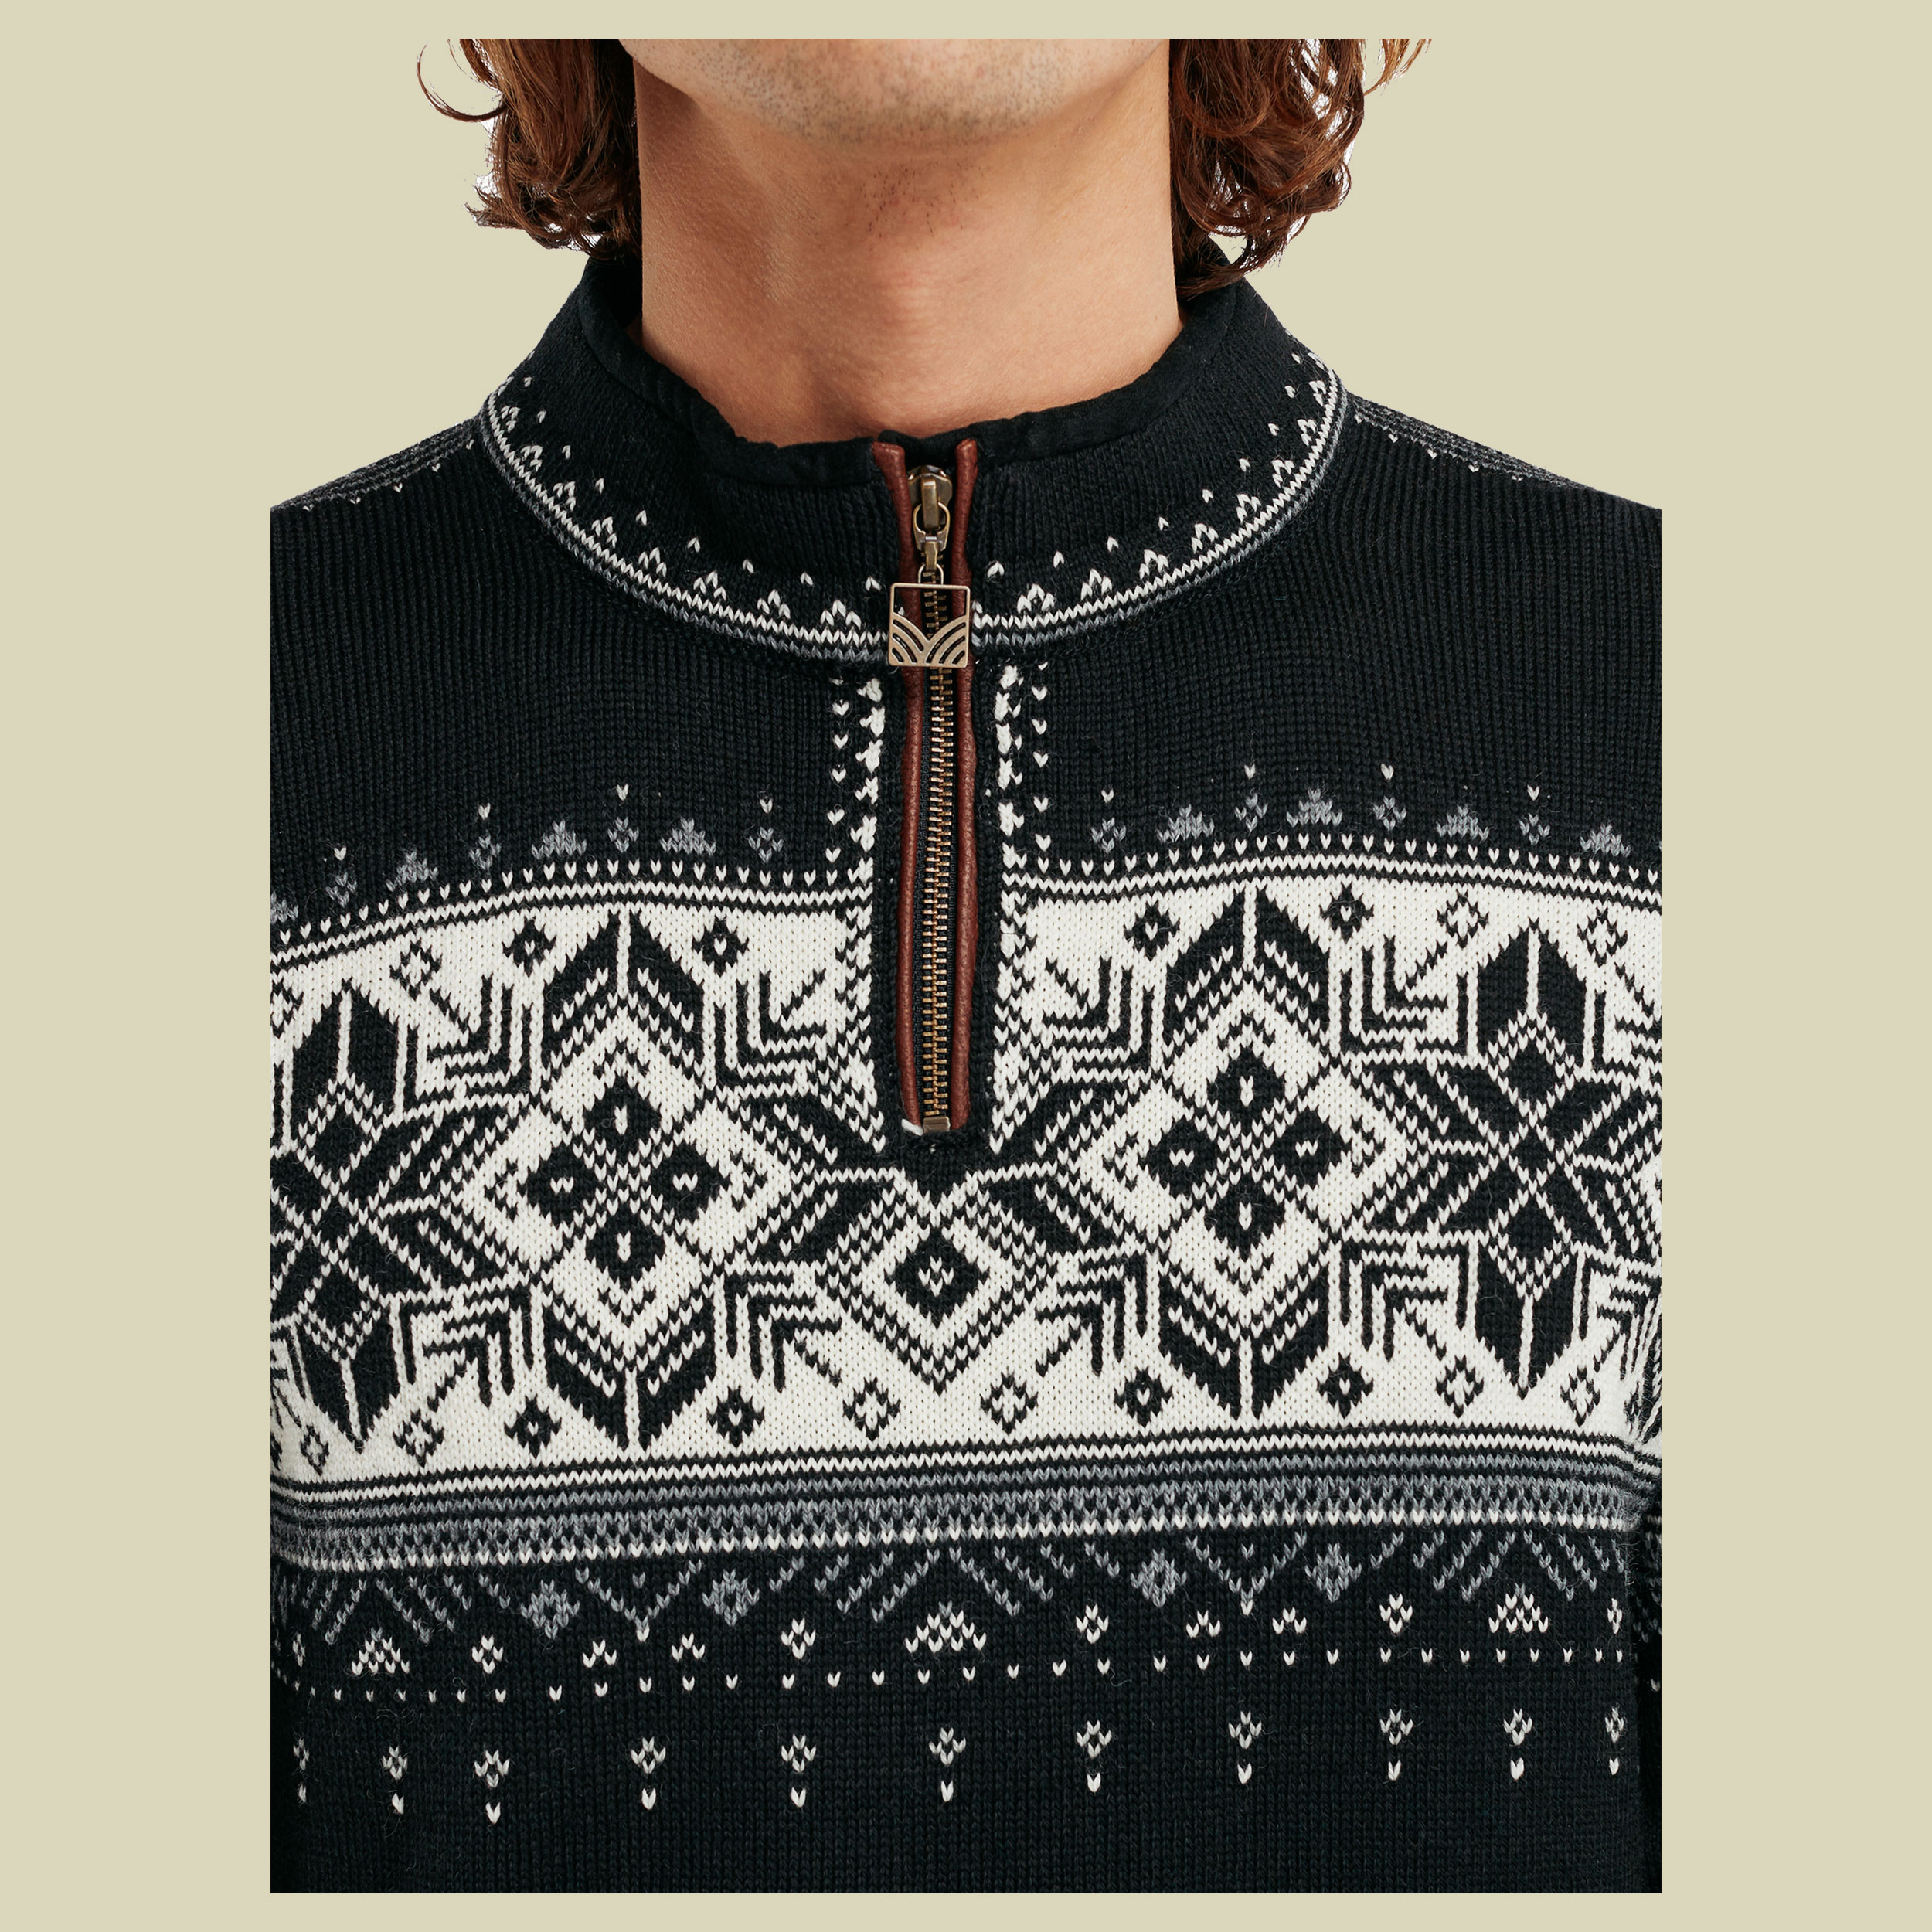 Blyfjell Unisex Sweater Größe L  Farbe black smoke/off white/light charcoal